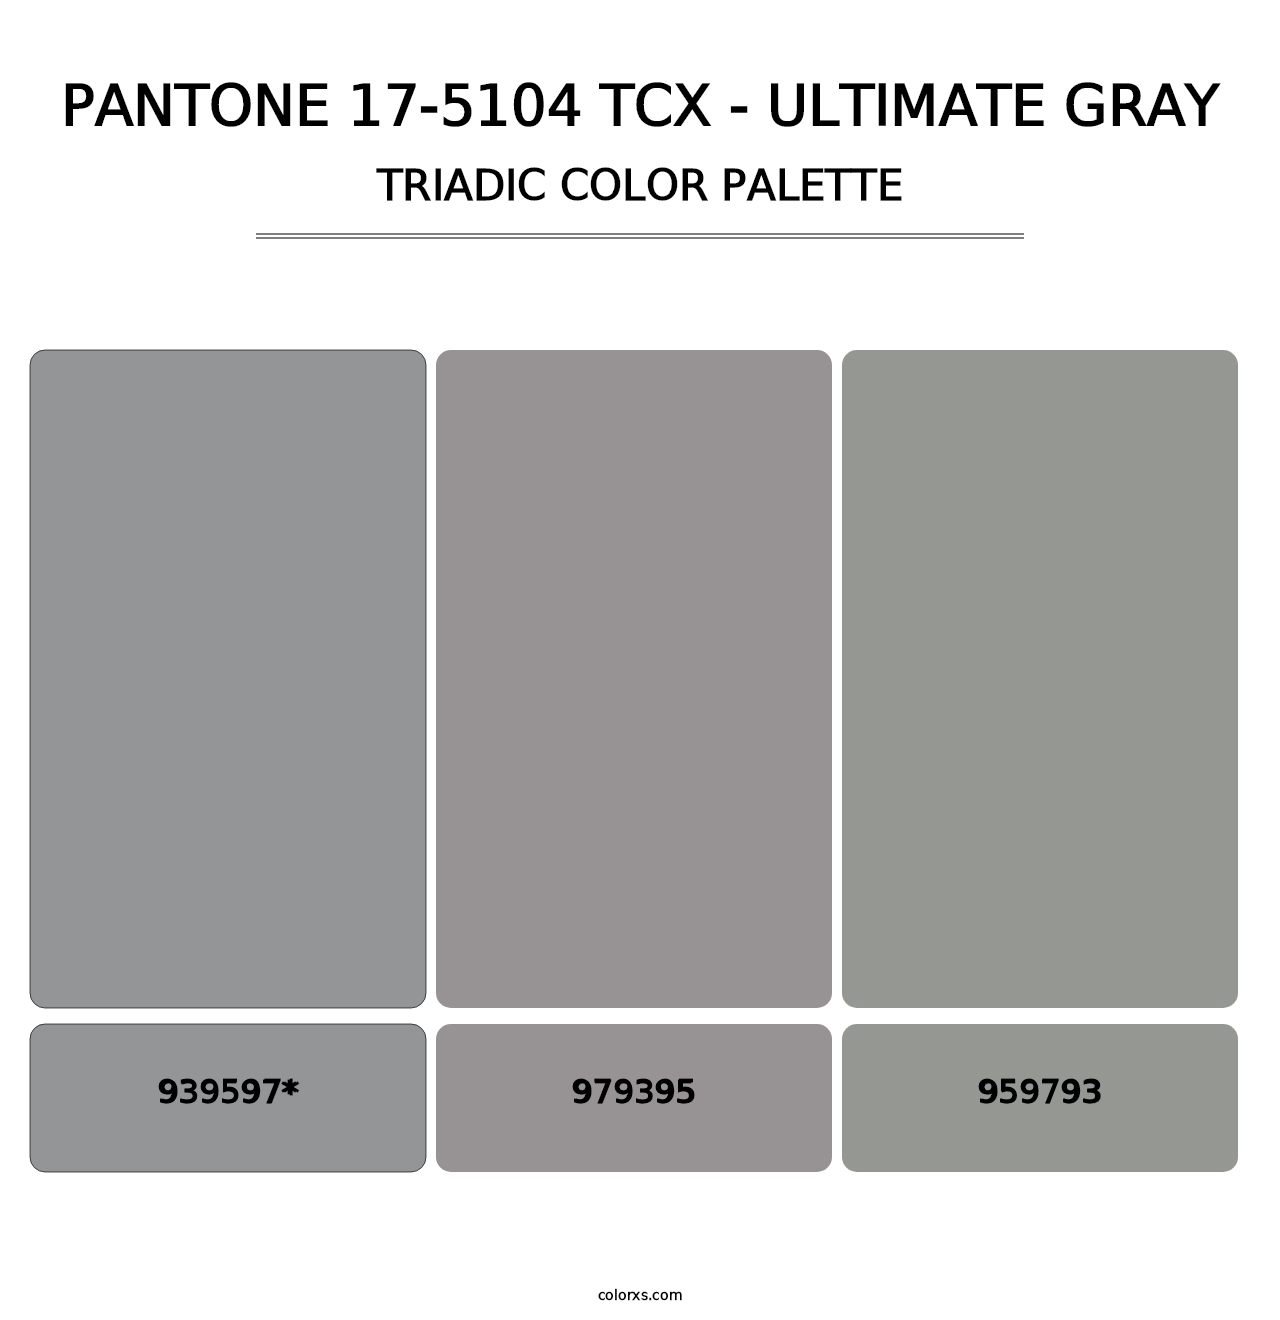 PANTONE 17-5104 TCX - Ultimate Gray - Triadic Color Palette